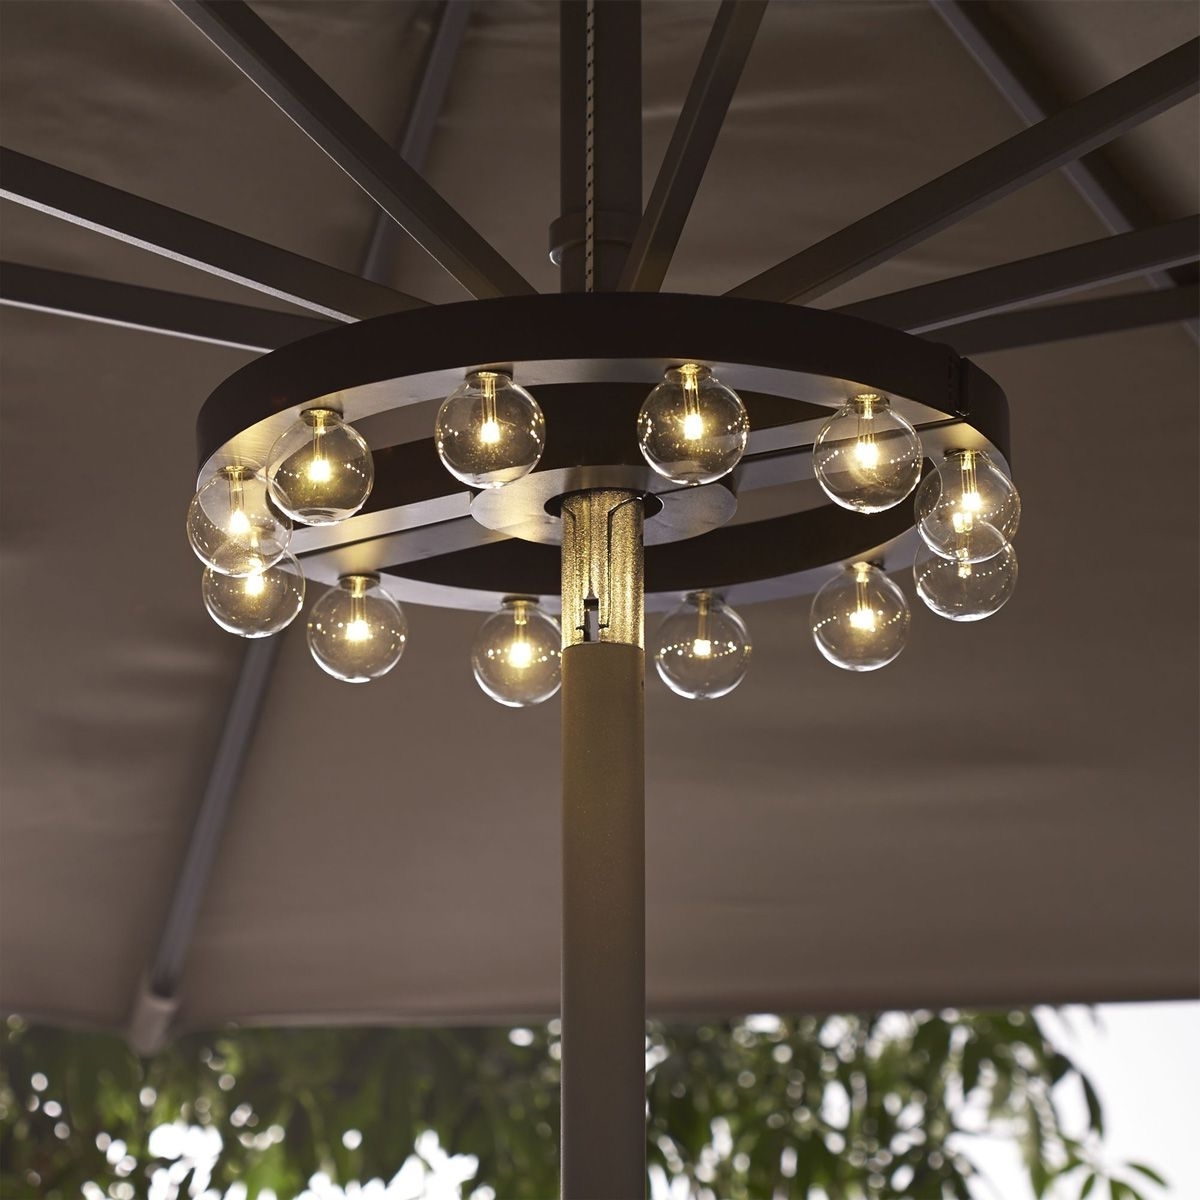 Solar Lights For Patio Umbrellas